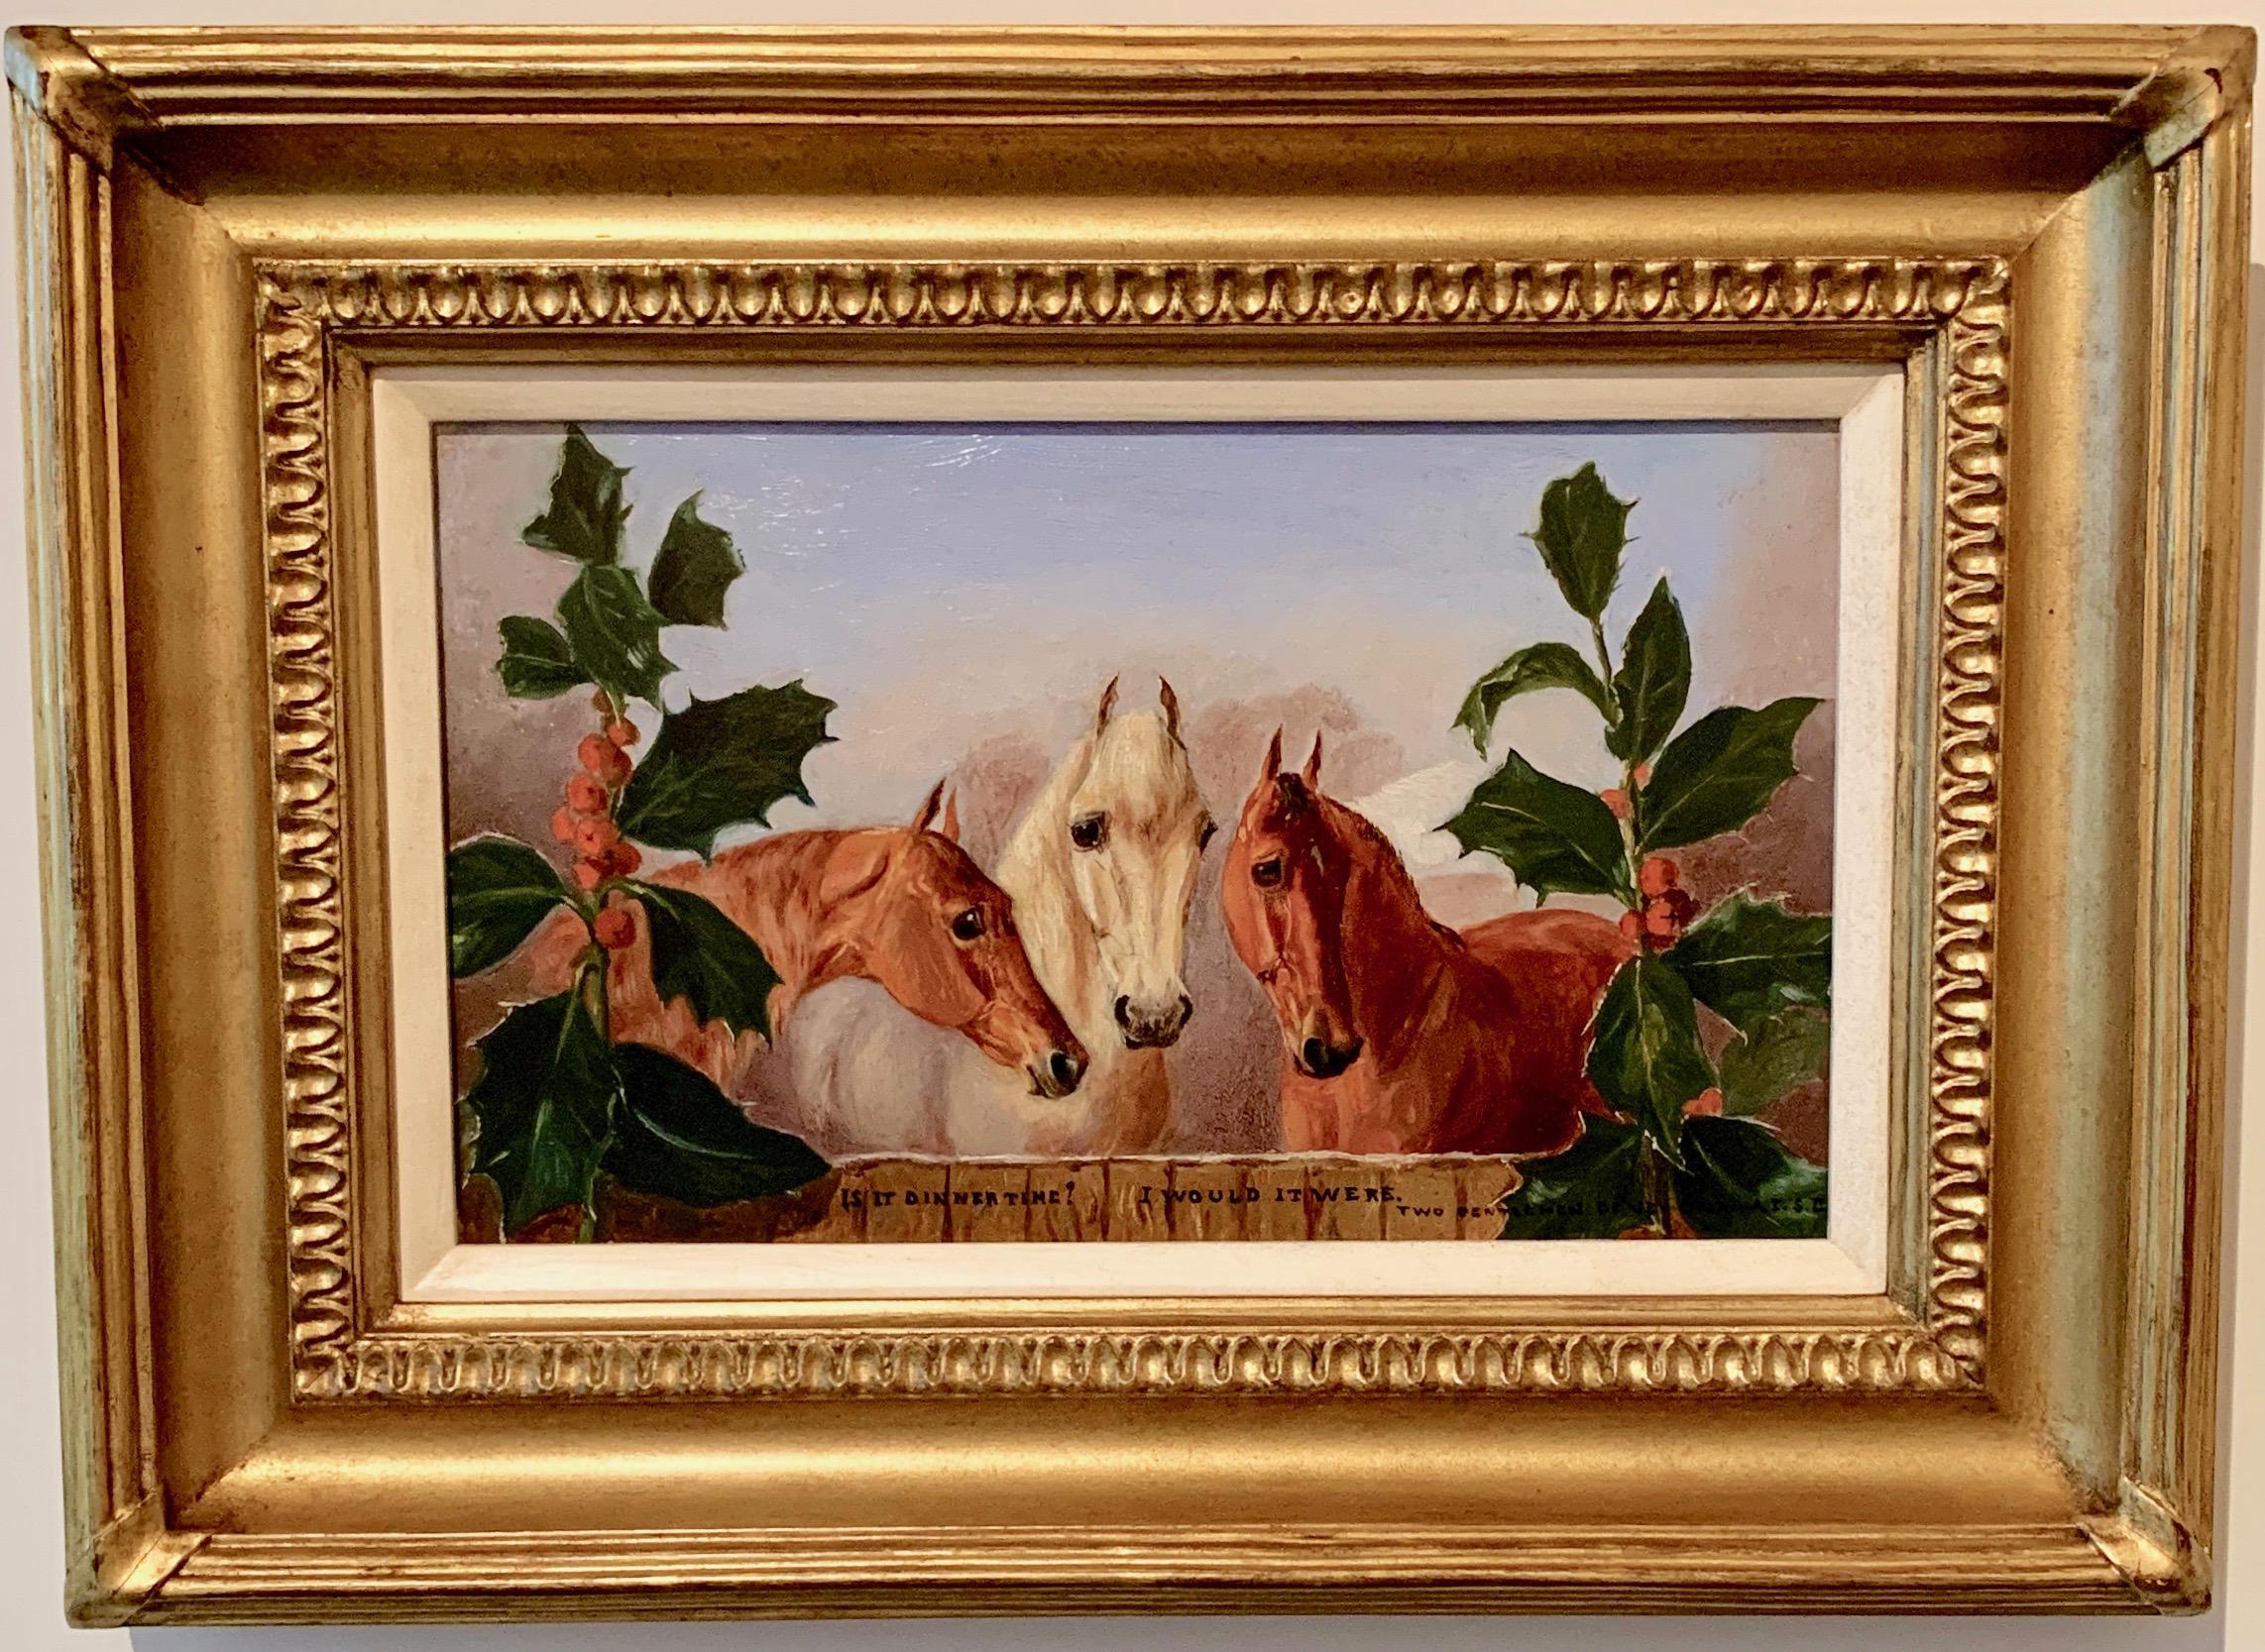 Algernon Stuart Portrait Painting - Antique English Horses portrait with holly, Shakespeare quote, in a landscape.